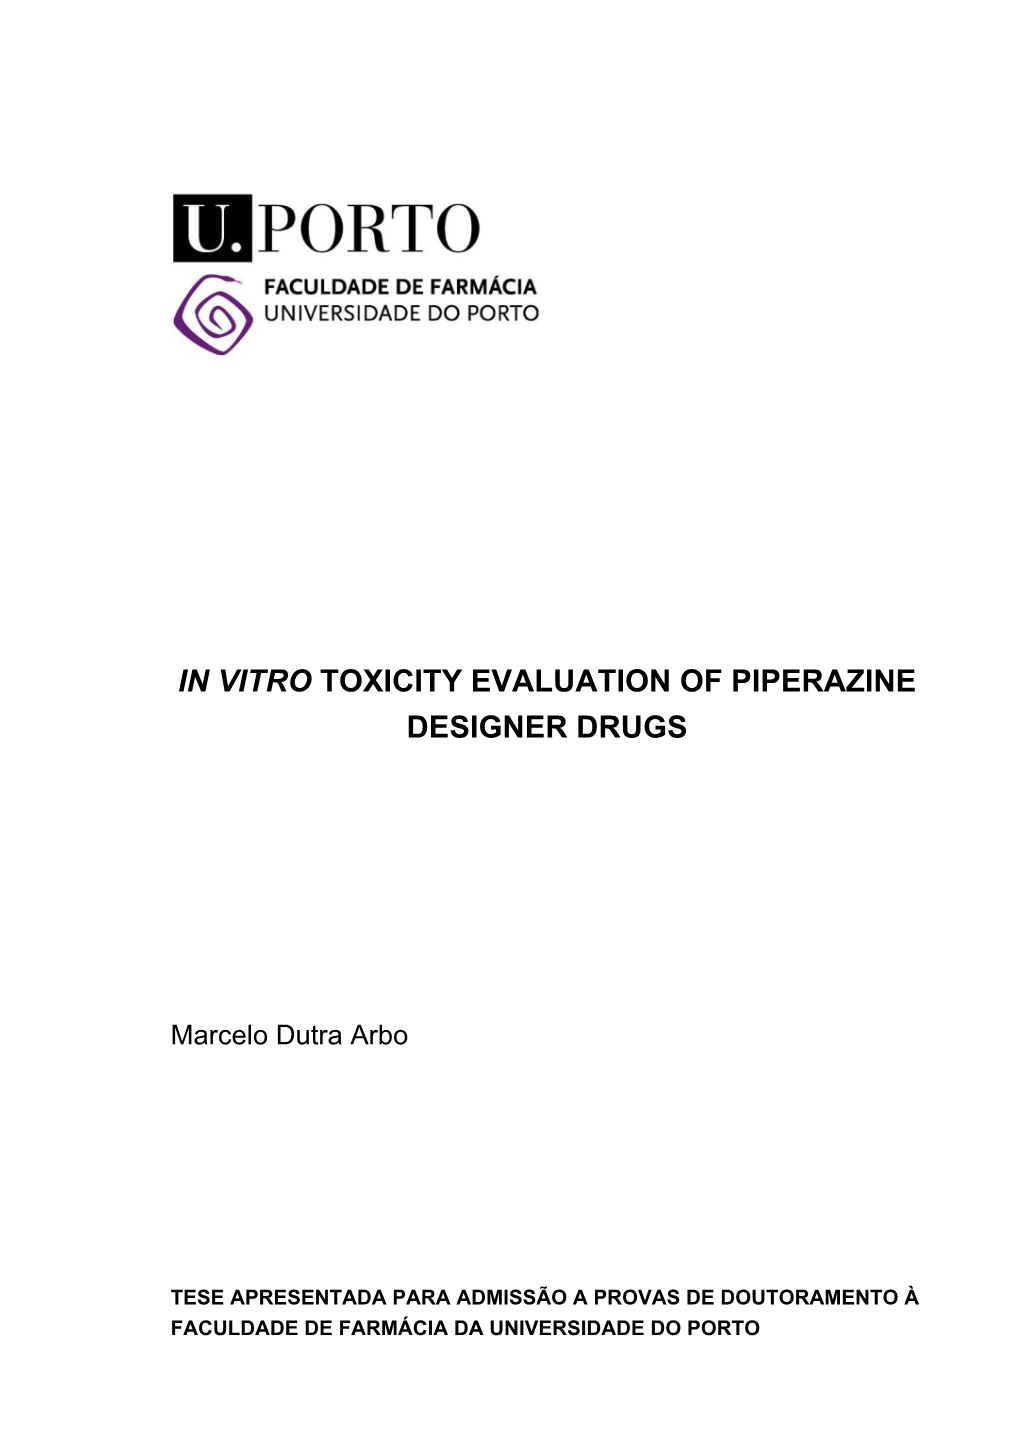 In Vitro Toxicity Evaluation of Piperazine Designer Drugs